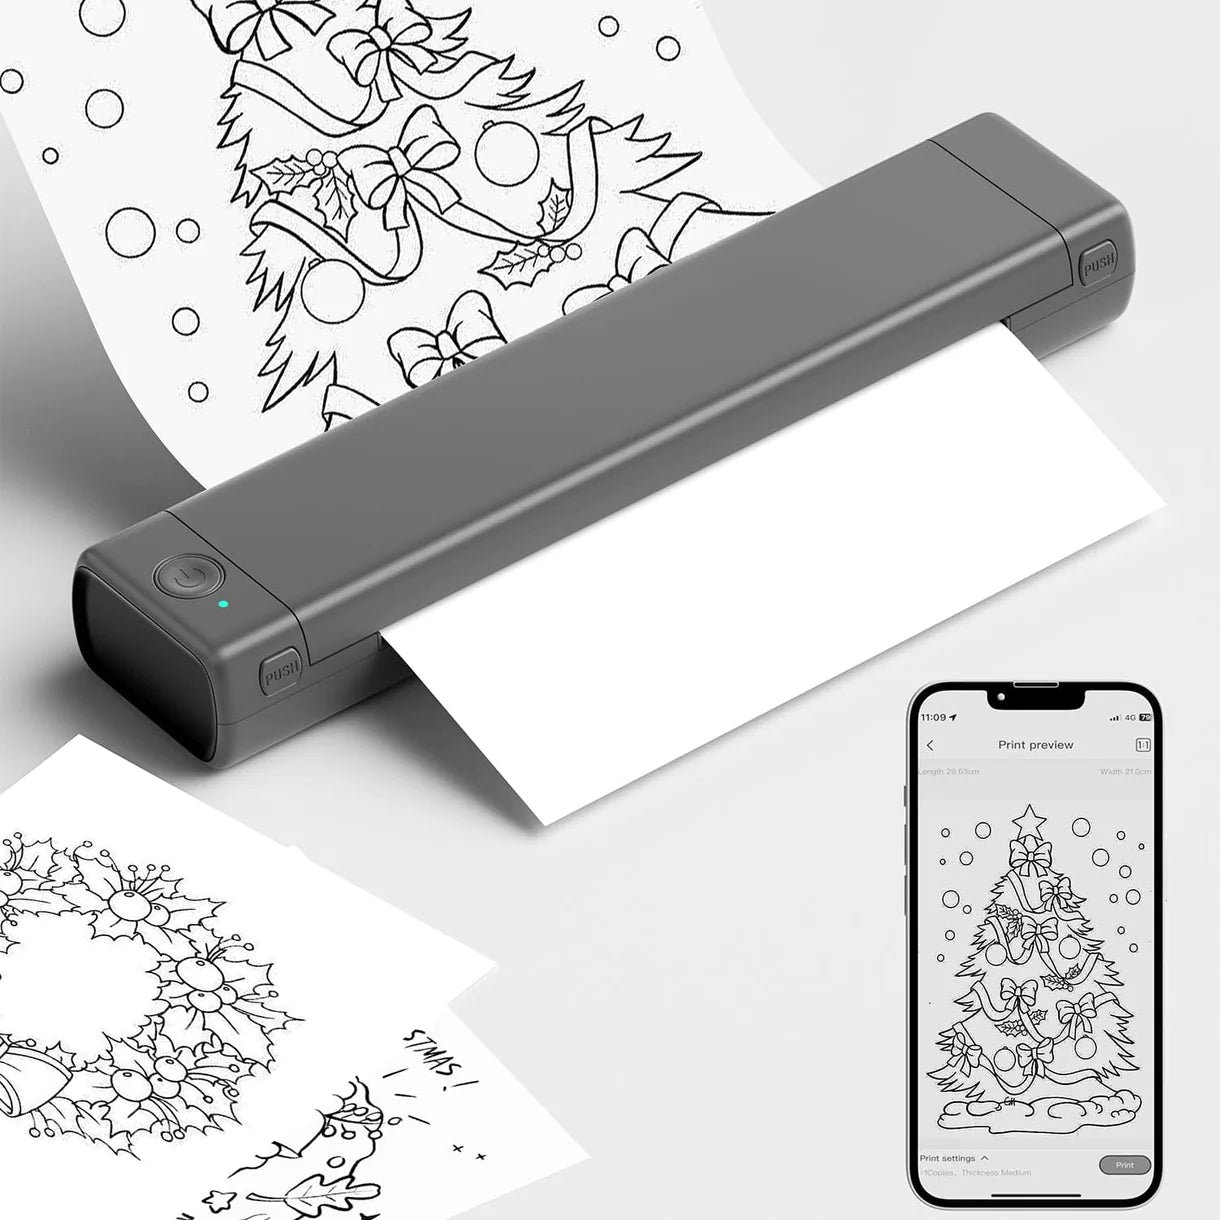 InkVibe Pro Wireless Bluetooth Tattoo Printer